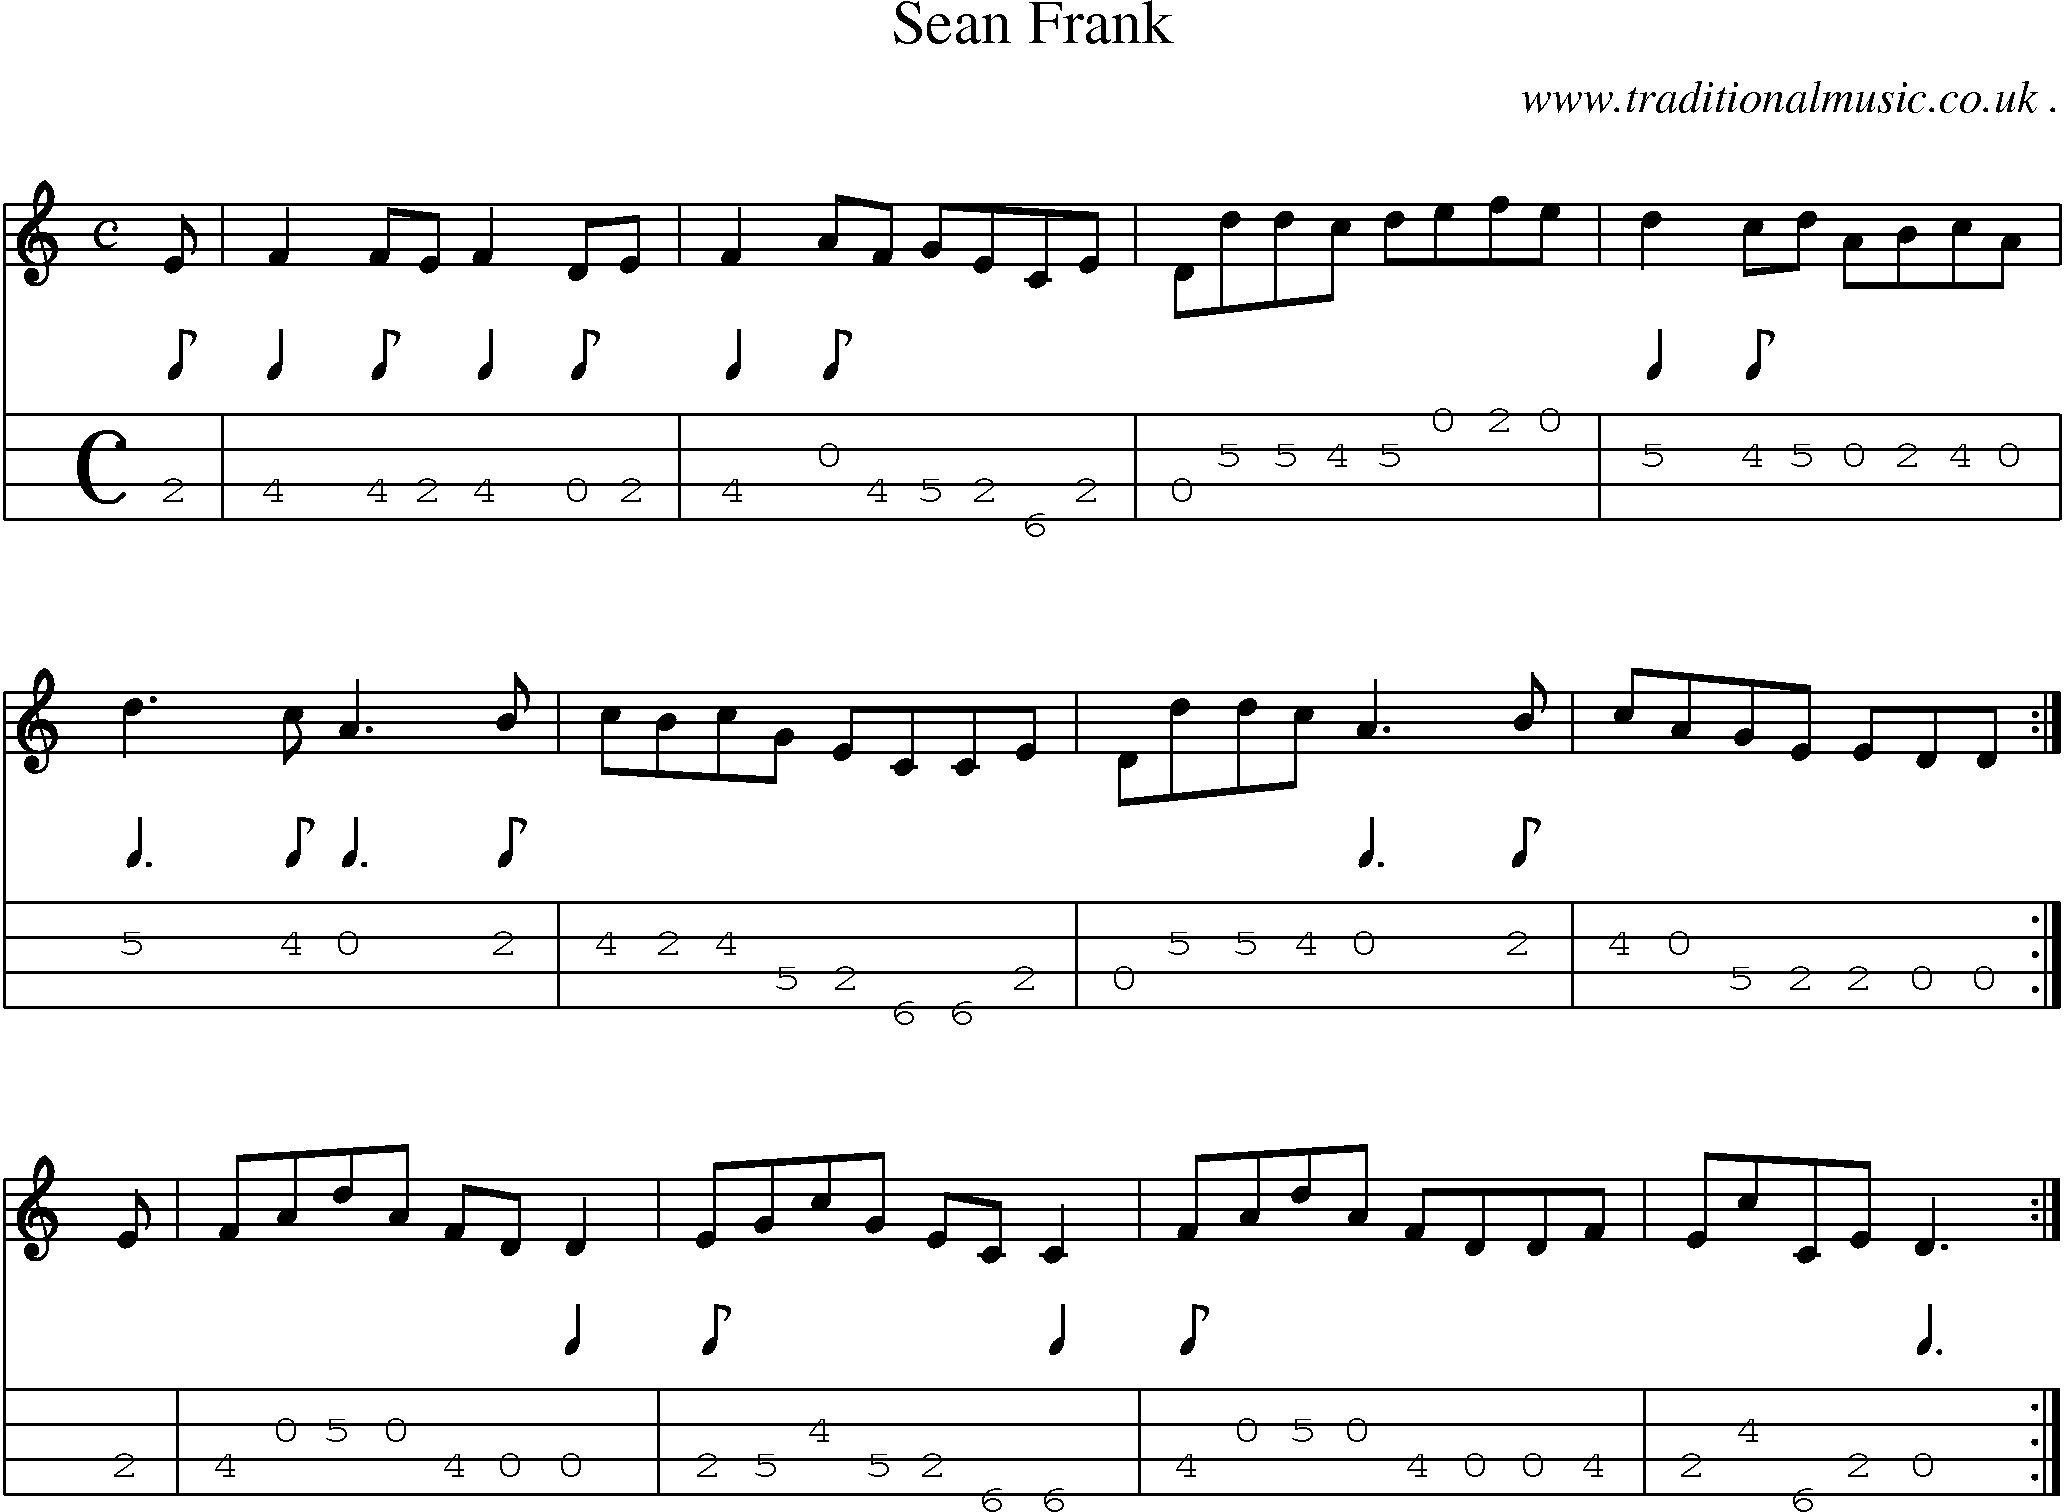 Sheet-Music and Mandolin Tabs for Sean Frank